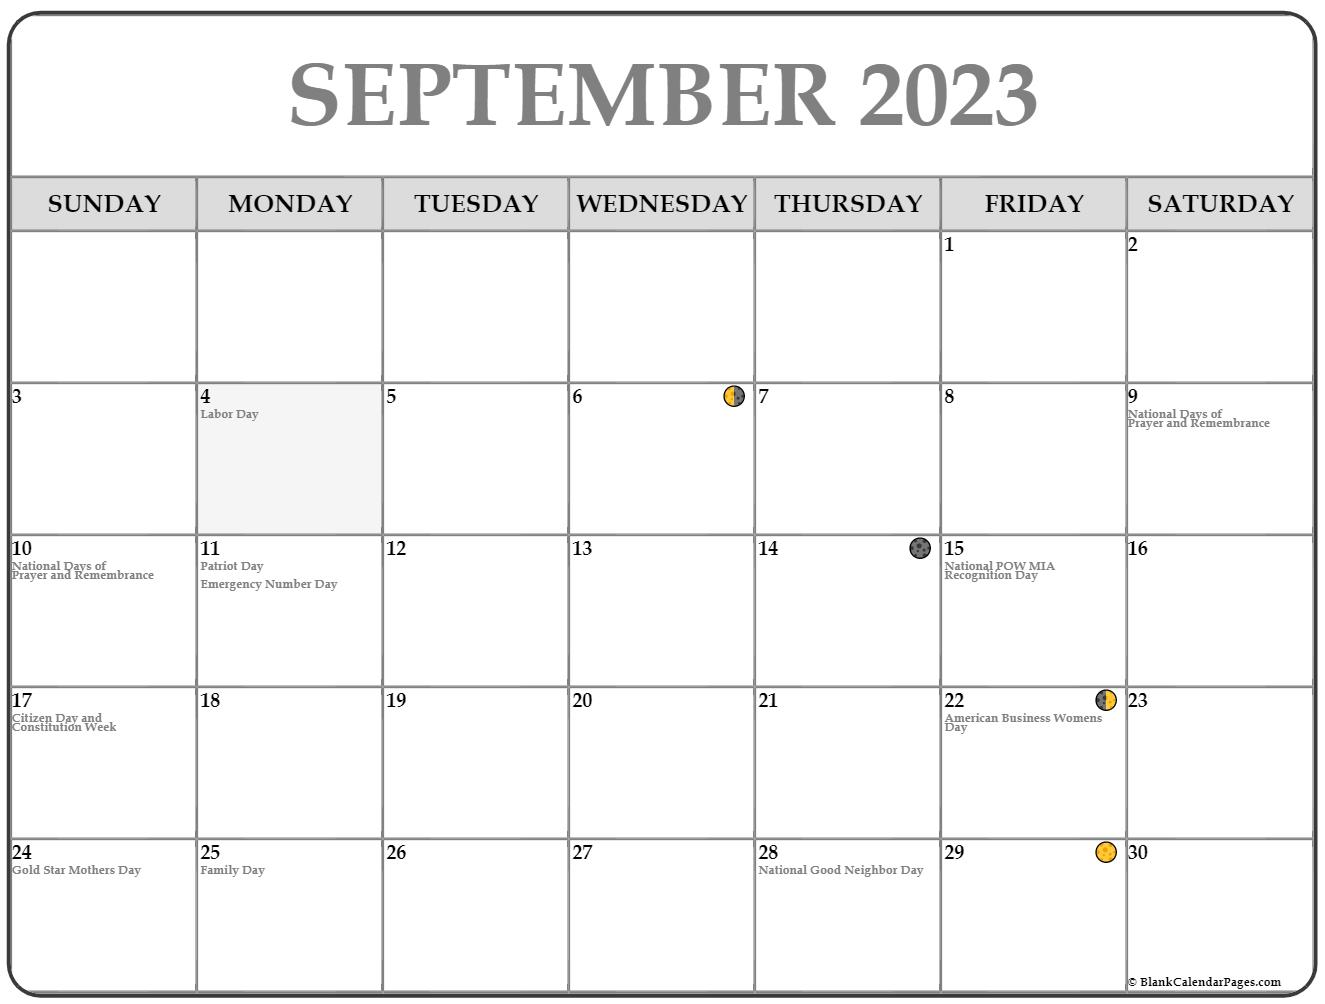 September 2023 Lunar Calendar Moon Phase Calendar